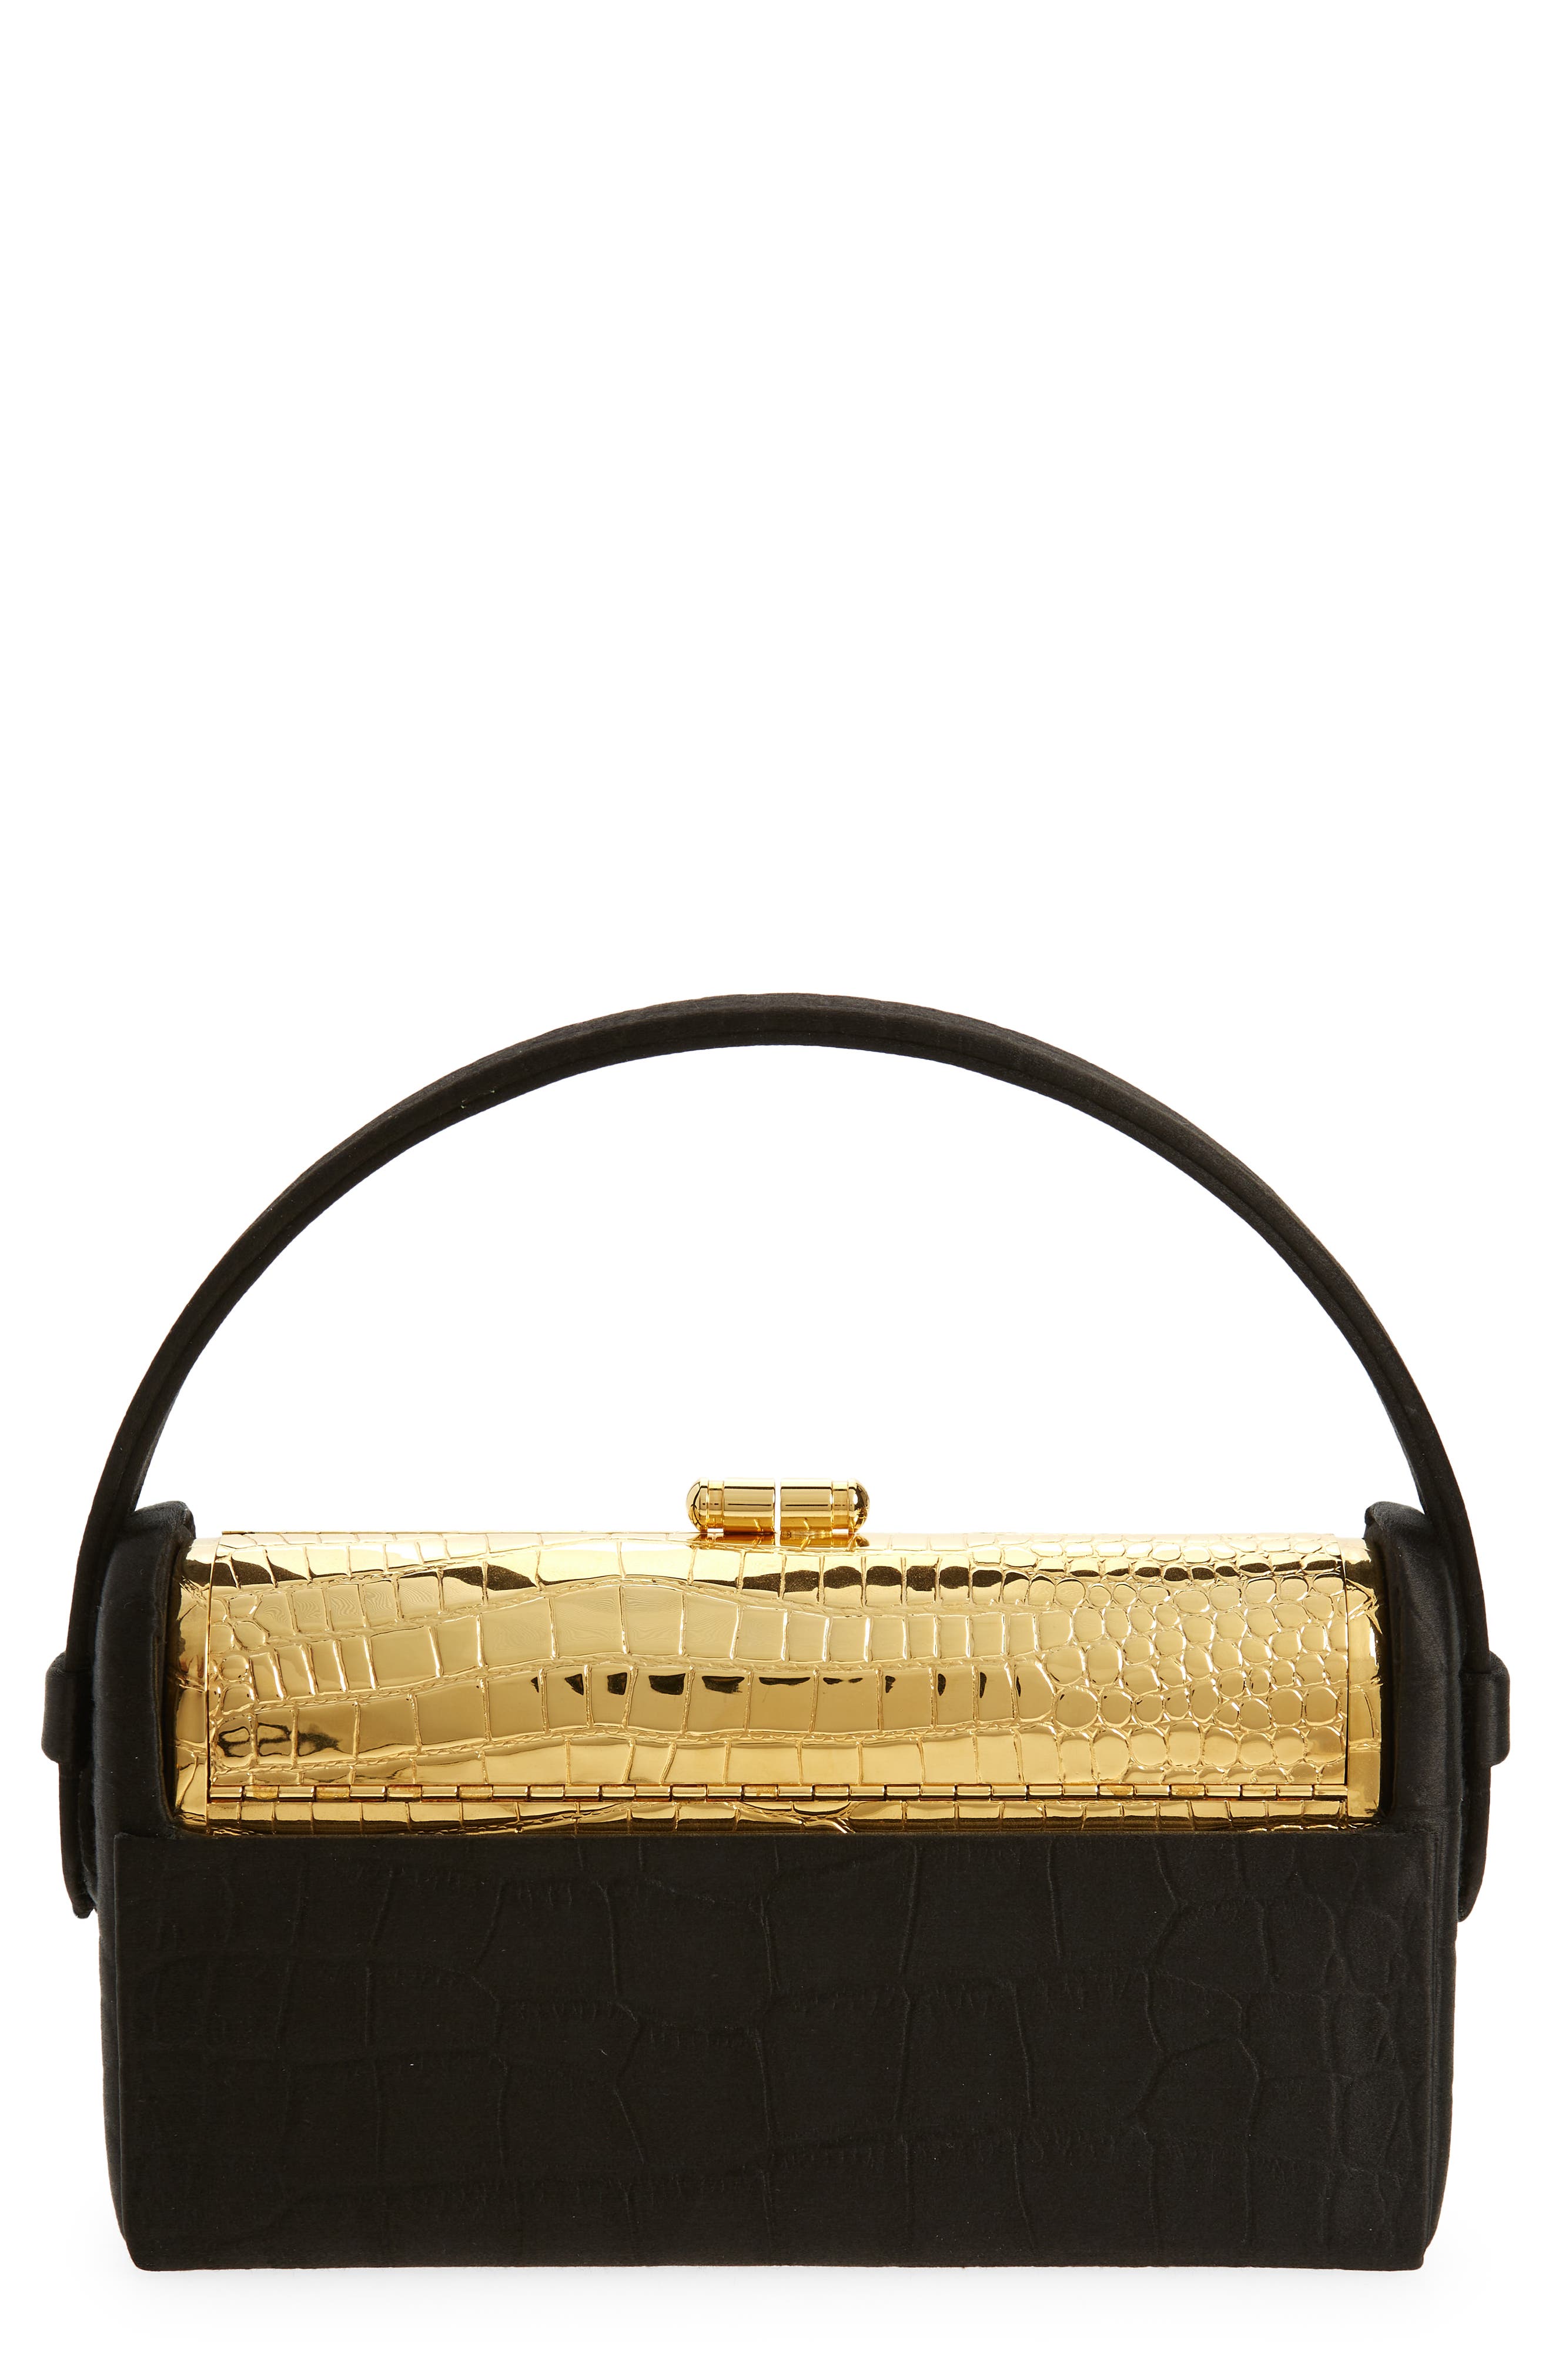 Bienen Davis x Aureta Regine Minaudiere Top Handle Bag in Black Croc Satin/Gold Croc